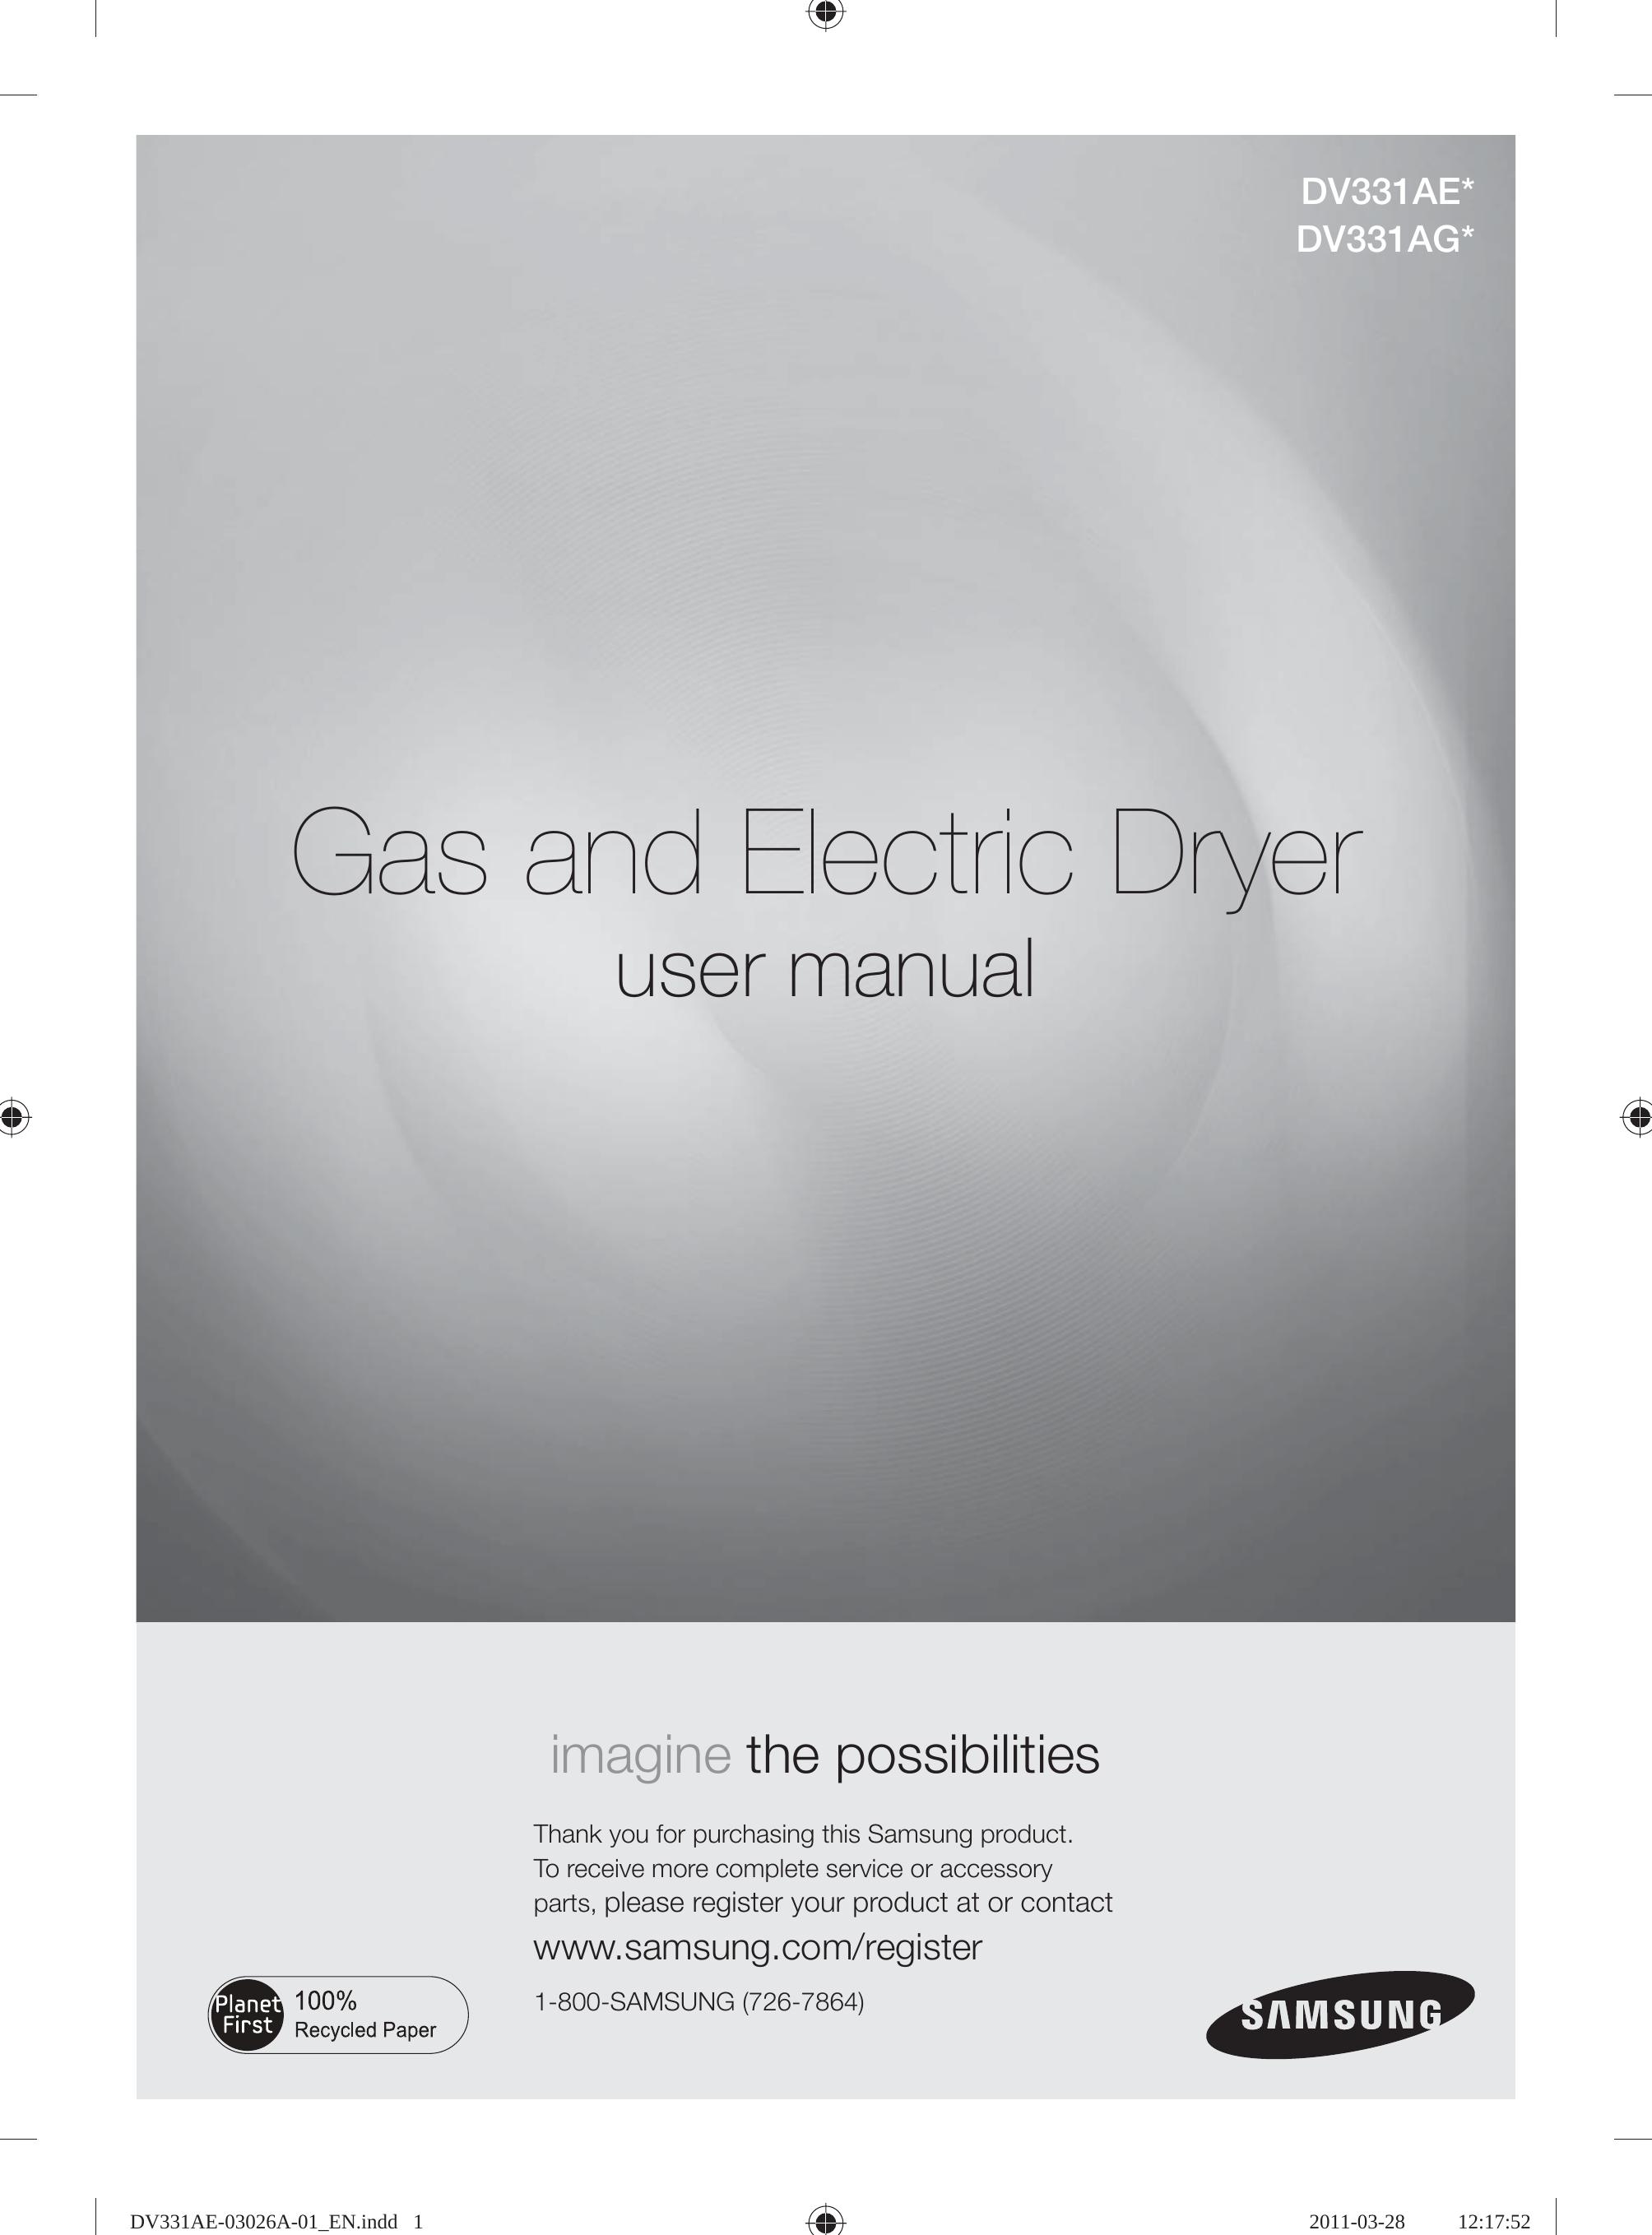 Samsung DV331AG Clothes Dryer User Manual